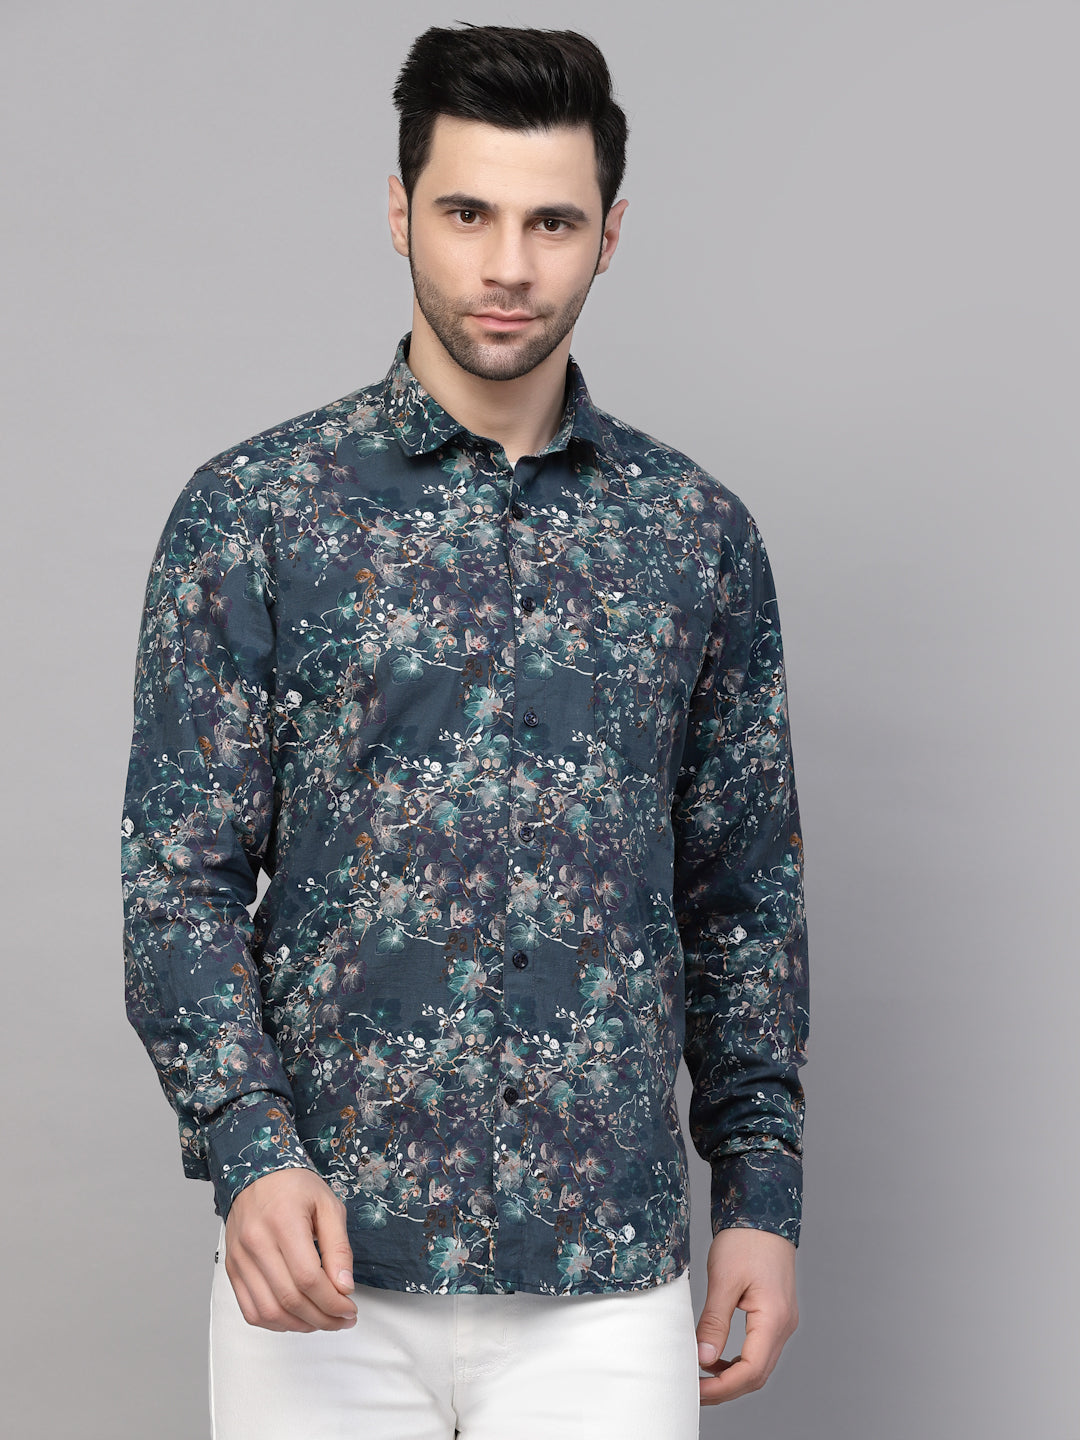 Valbone Men’s Digital Print Regular Fit Casual Floral Printed Shirt Full Sleeves